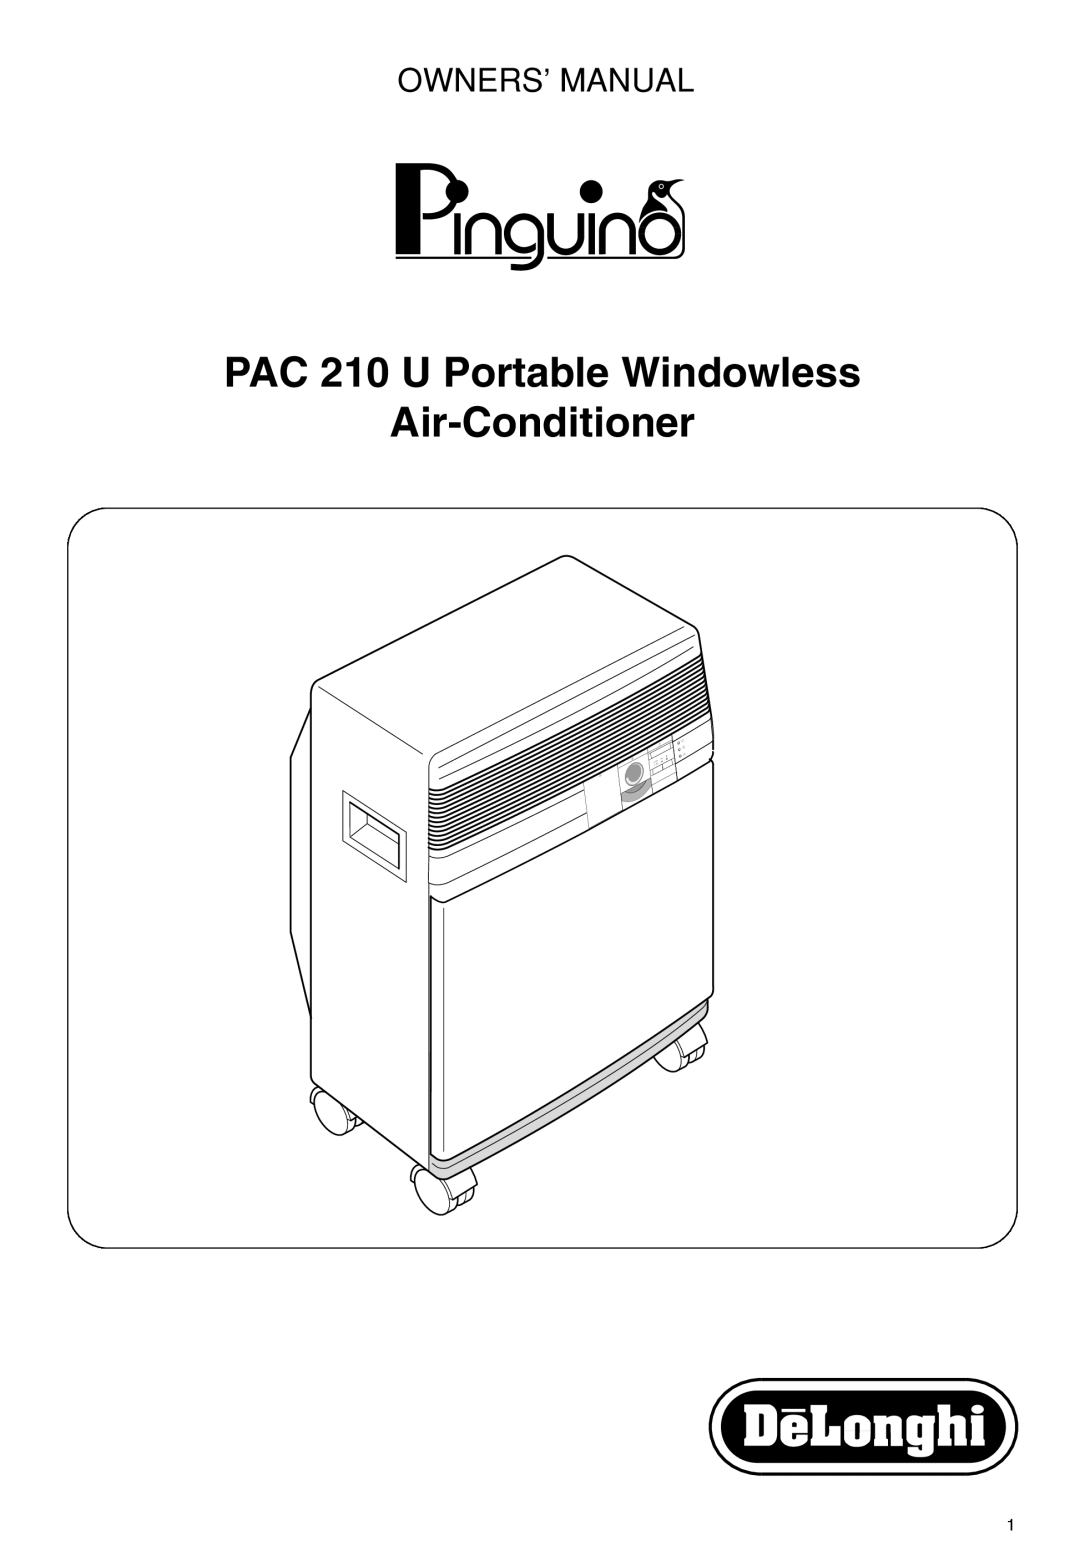 DeLonghi owner manual PAC 210 U Portable Windowless Air-Conditioner, Owners’ Manual 